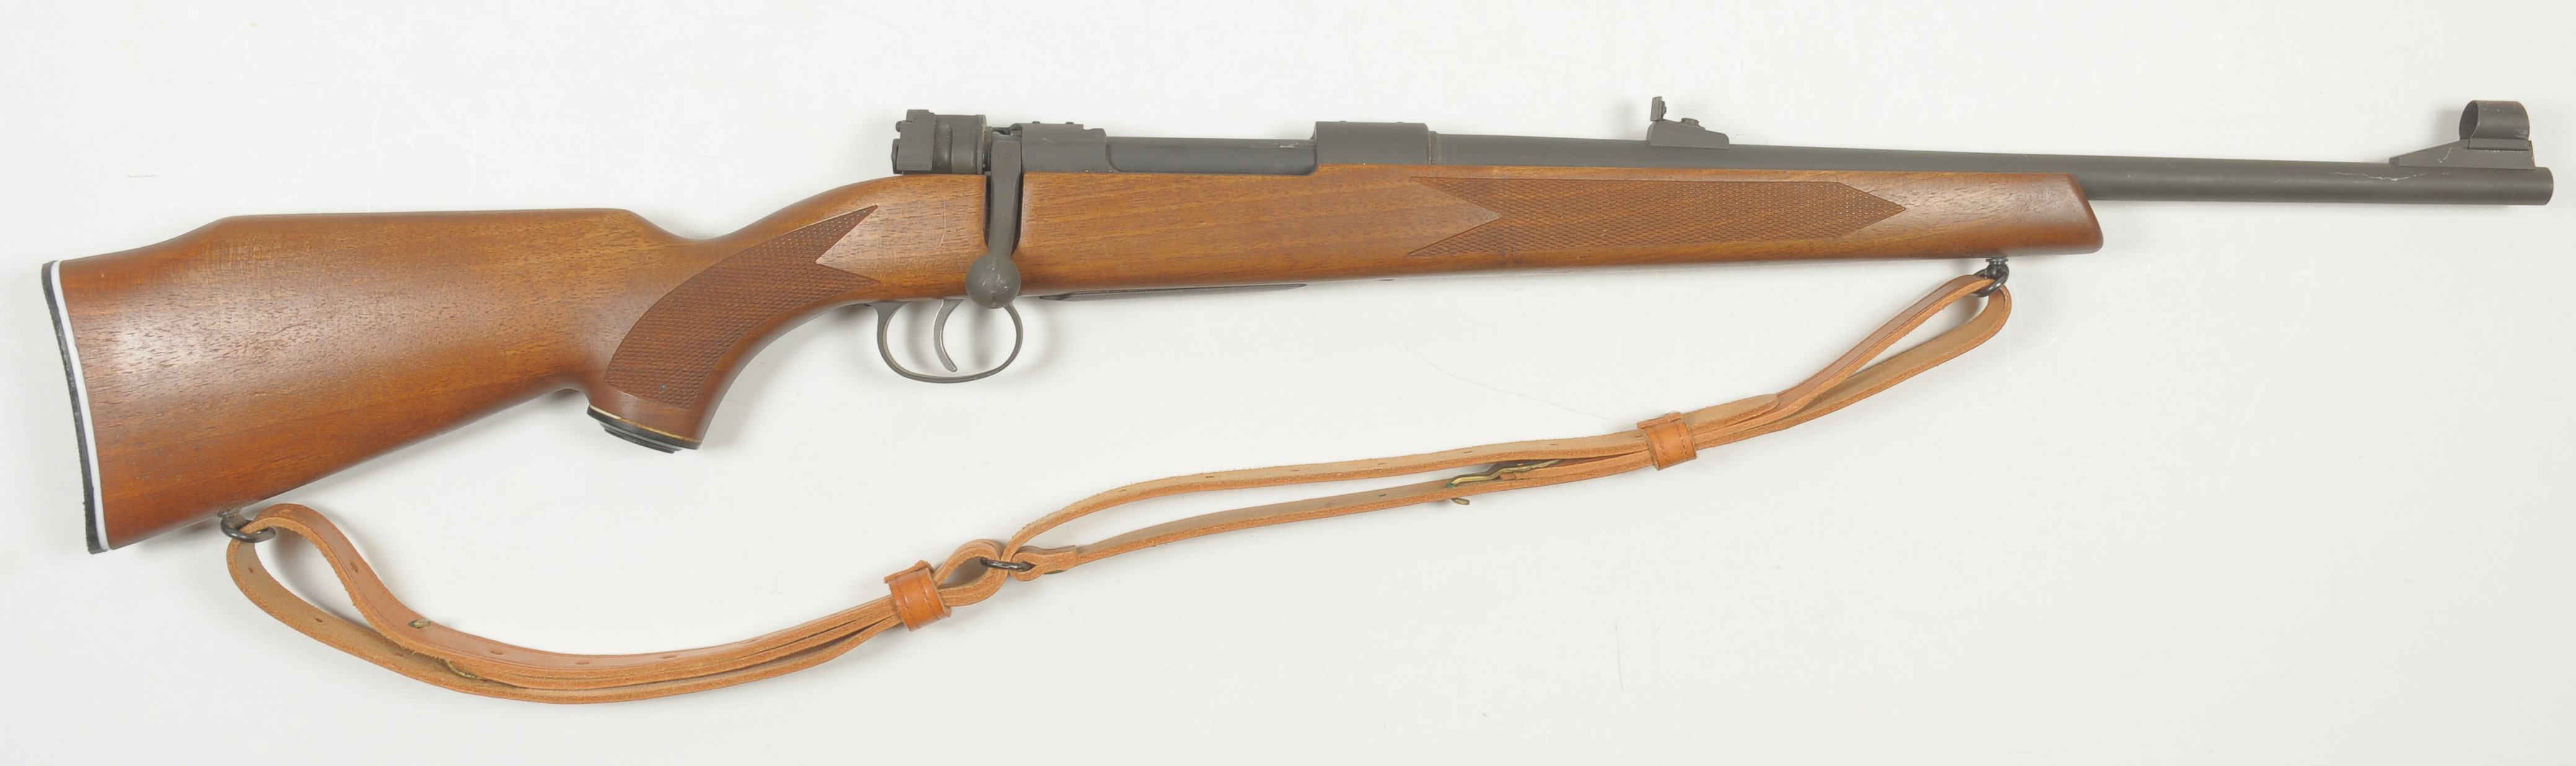 ./guns/rifle/bilder/Rifle-Kongsberg-M83SK-6011-1.jpg